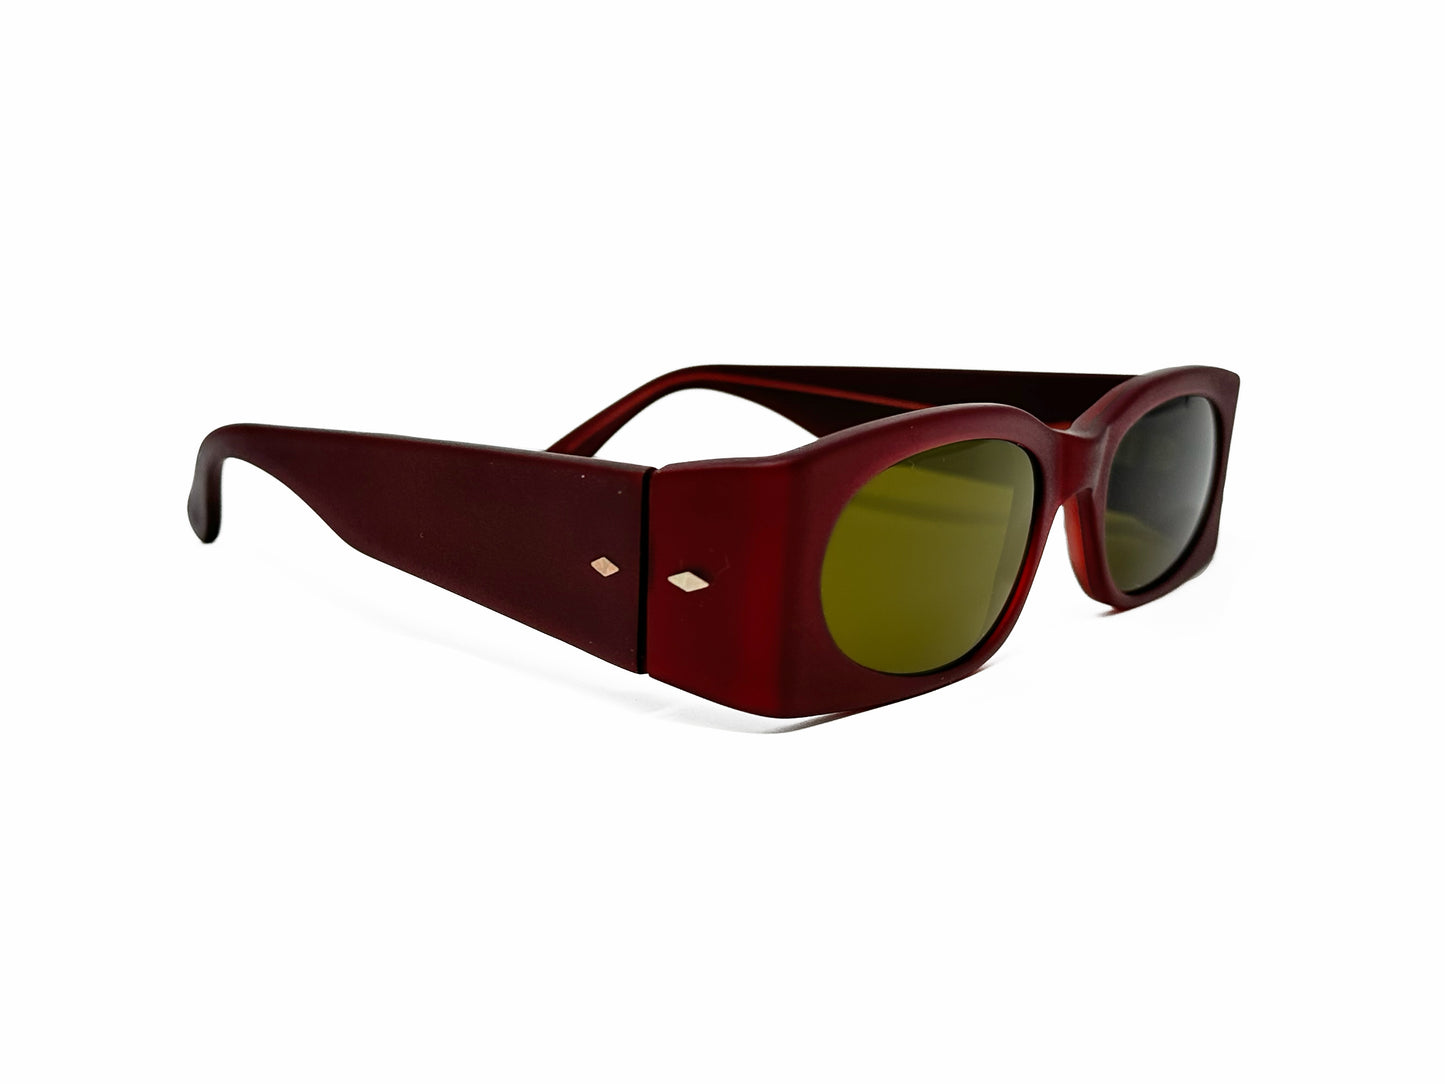 Kador rectangular acetate sunglasses with oval lenses. Model: DF2012. Color: M/1975 - Burgundy. Side